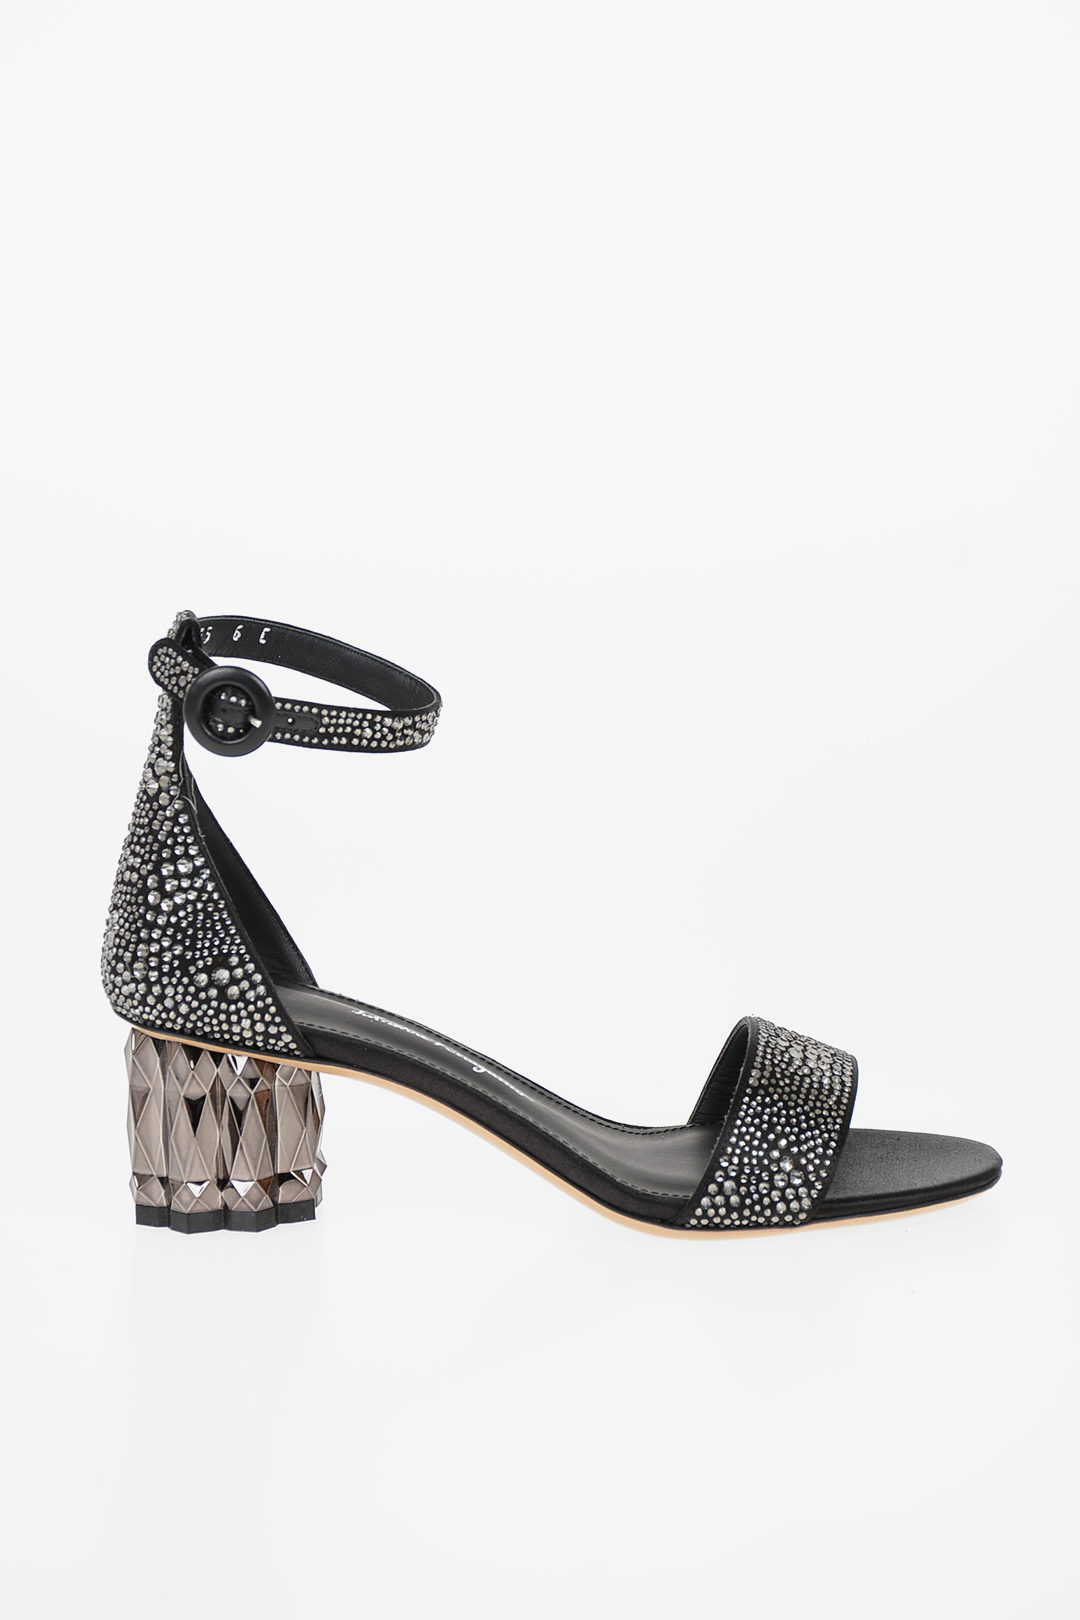 Salvatore Ferragamo 5.5cm leather AZALEA Decorative Heel Ankle-strap ...